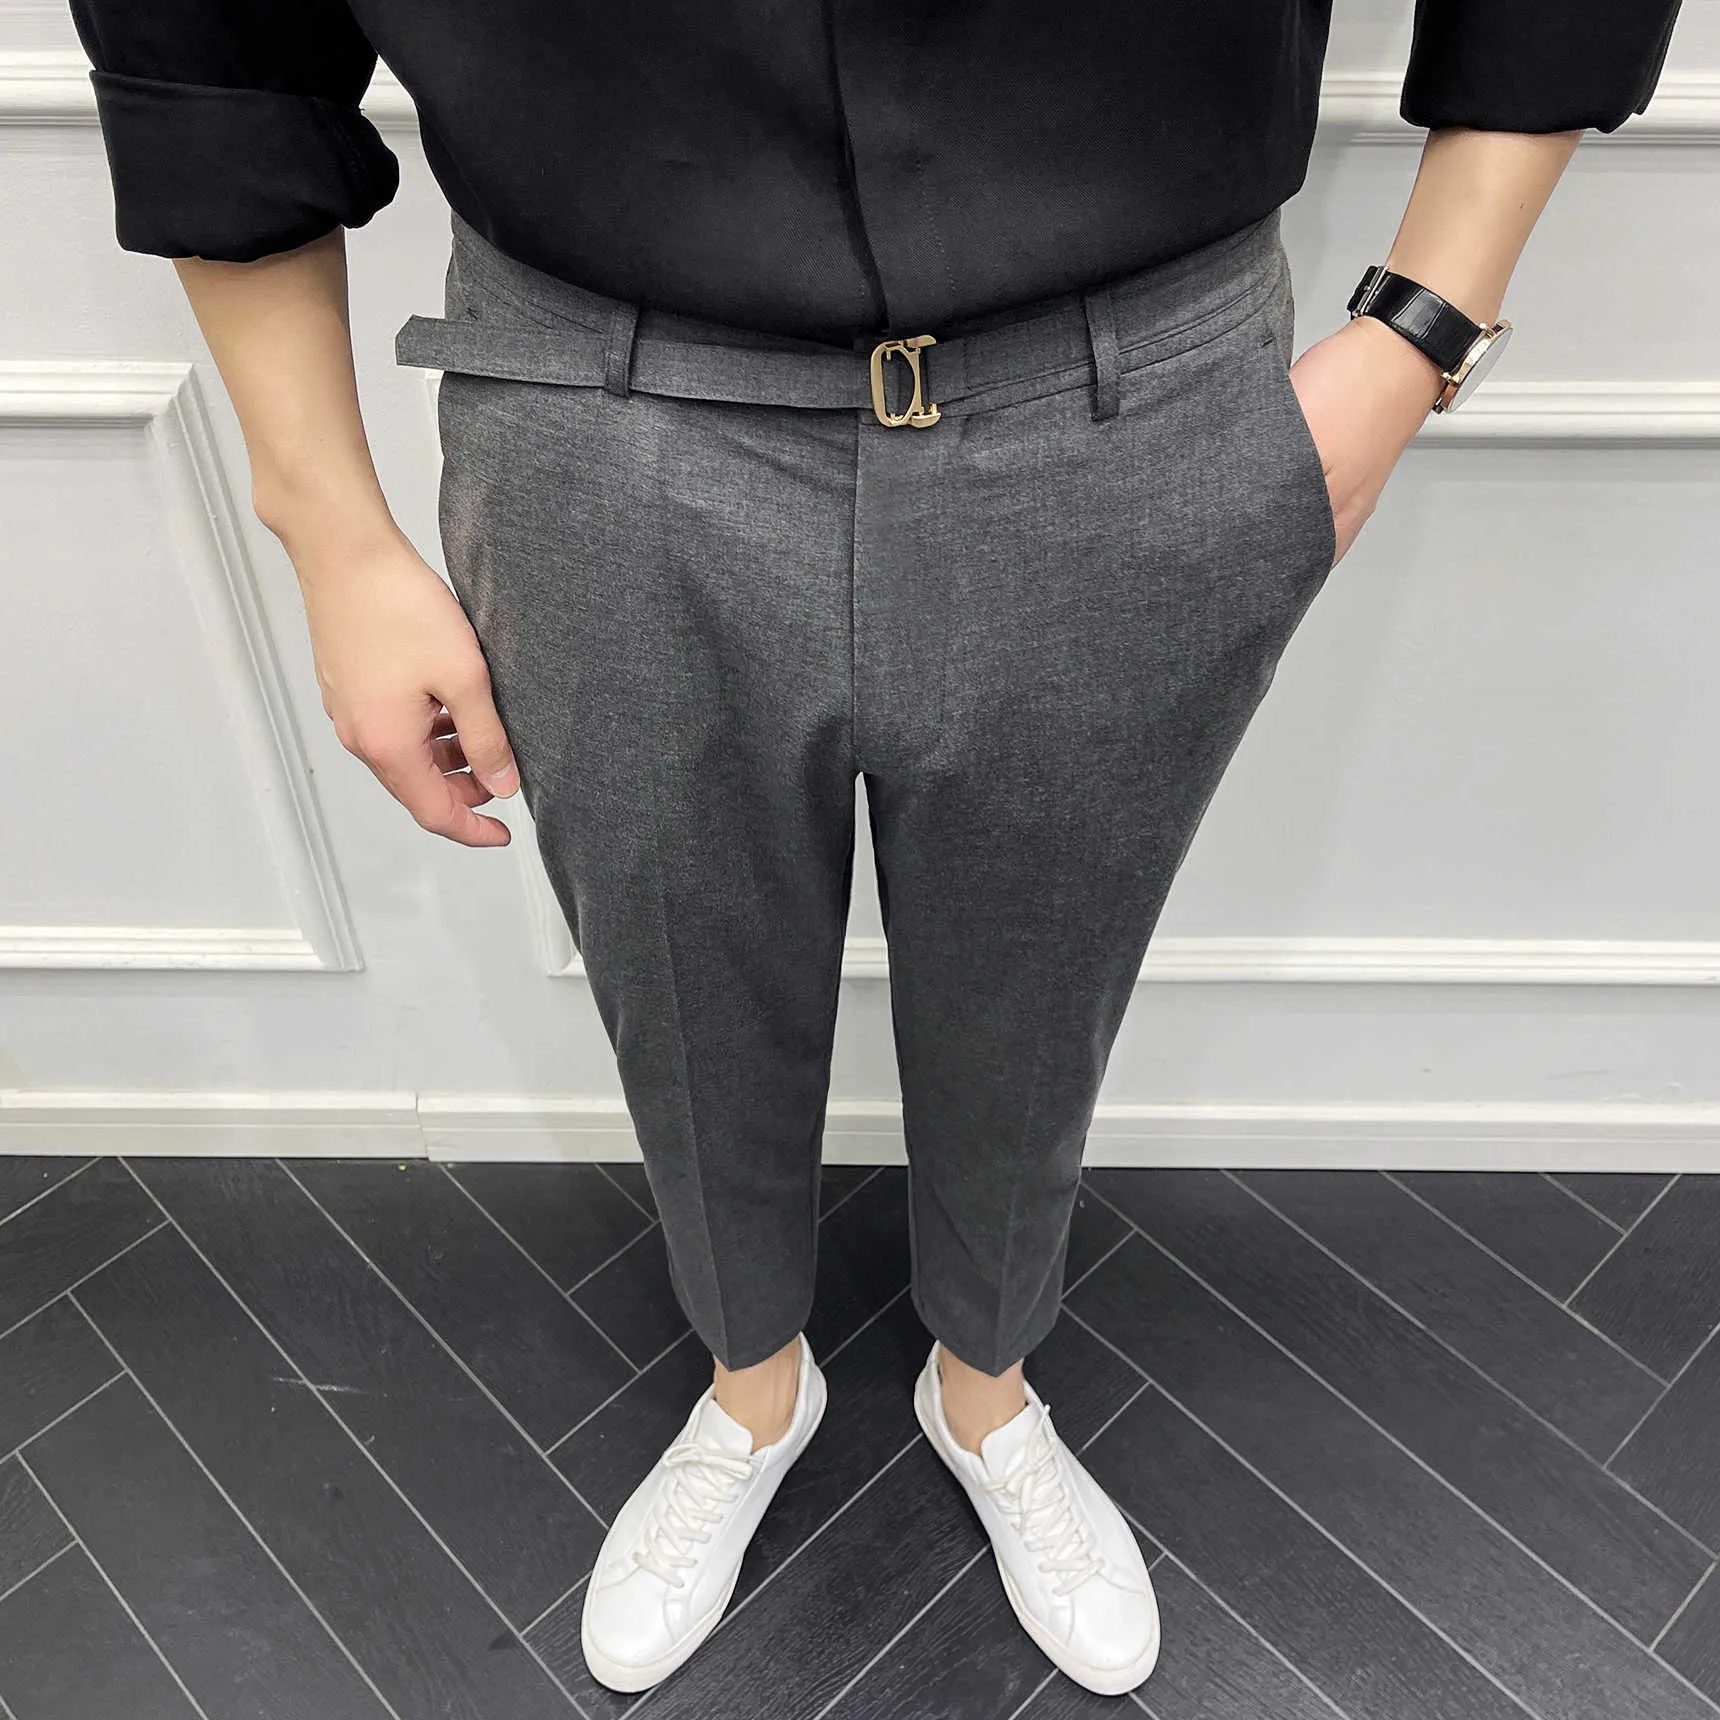 Black satin suit pants | The Kooples - US